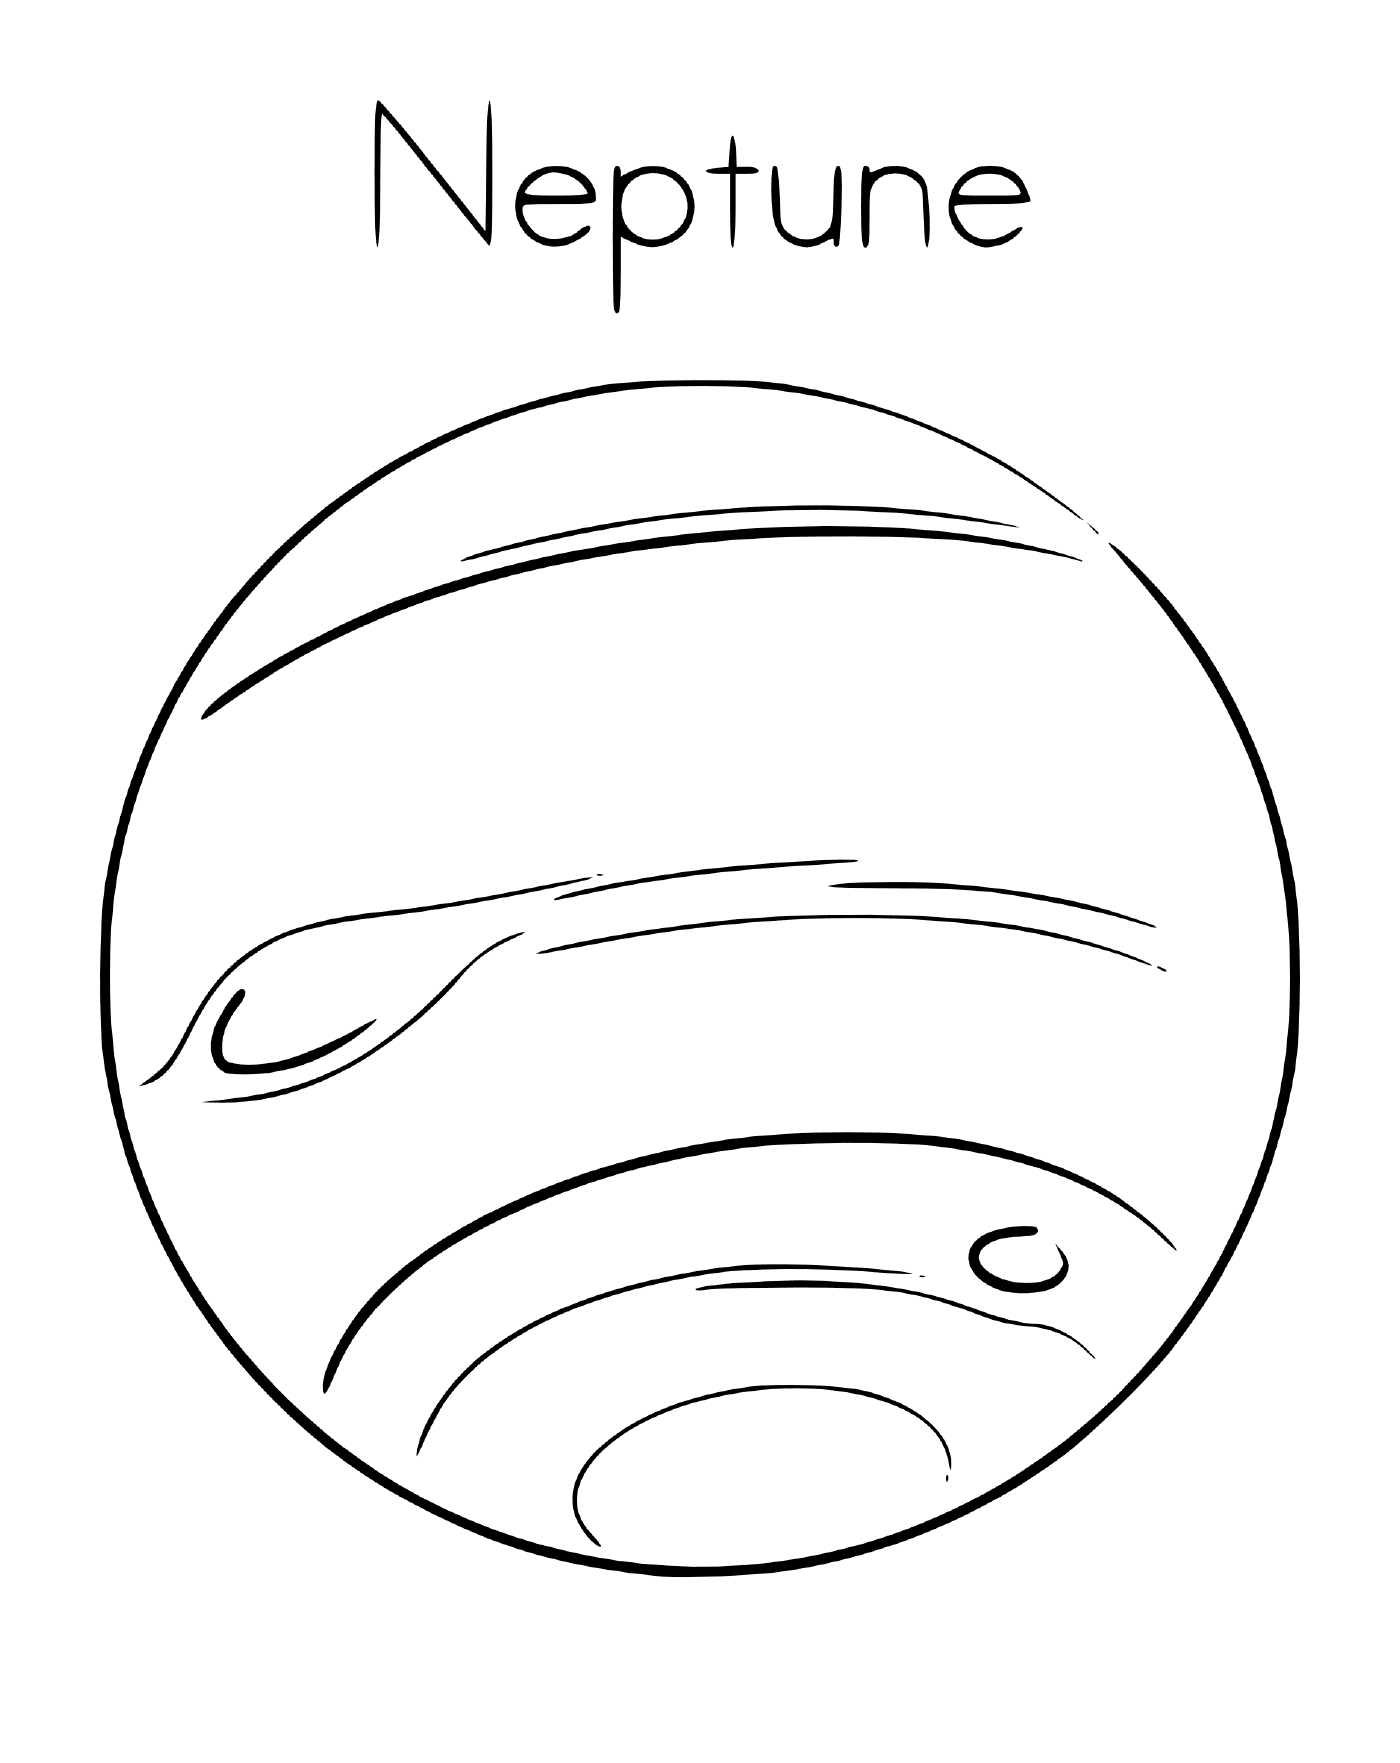 planete neptune